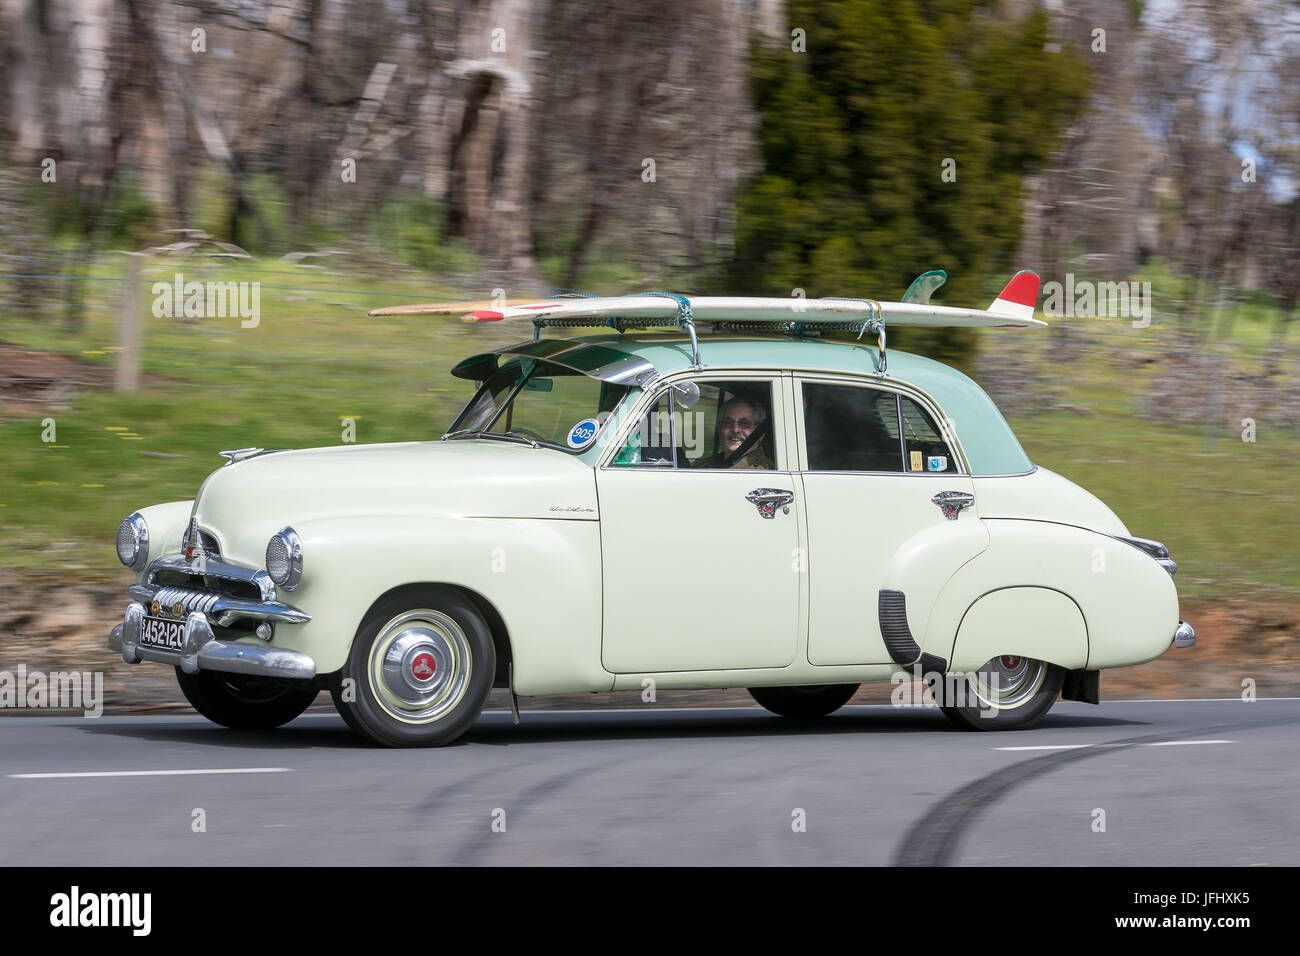 Vintage 1955 Holden FJ Sedan driving on country roads near the town of Birdwood, South Australia. Stock Photo